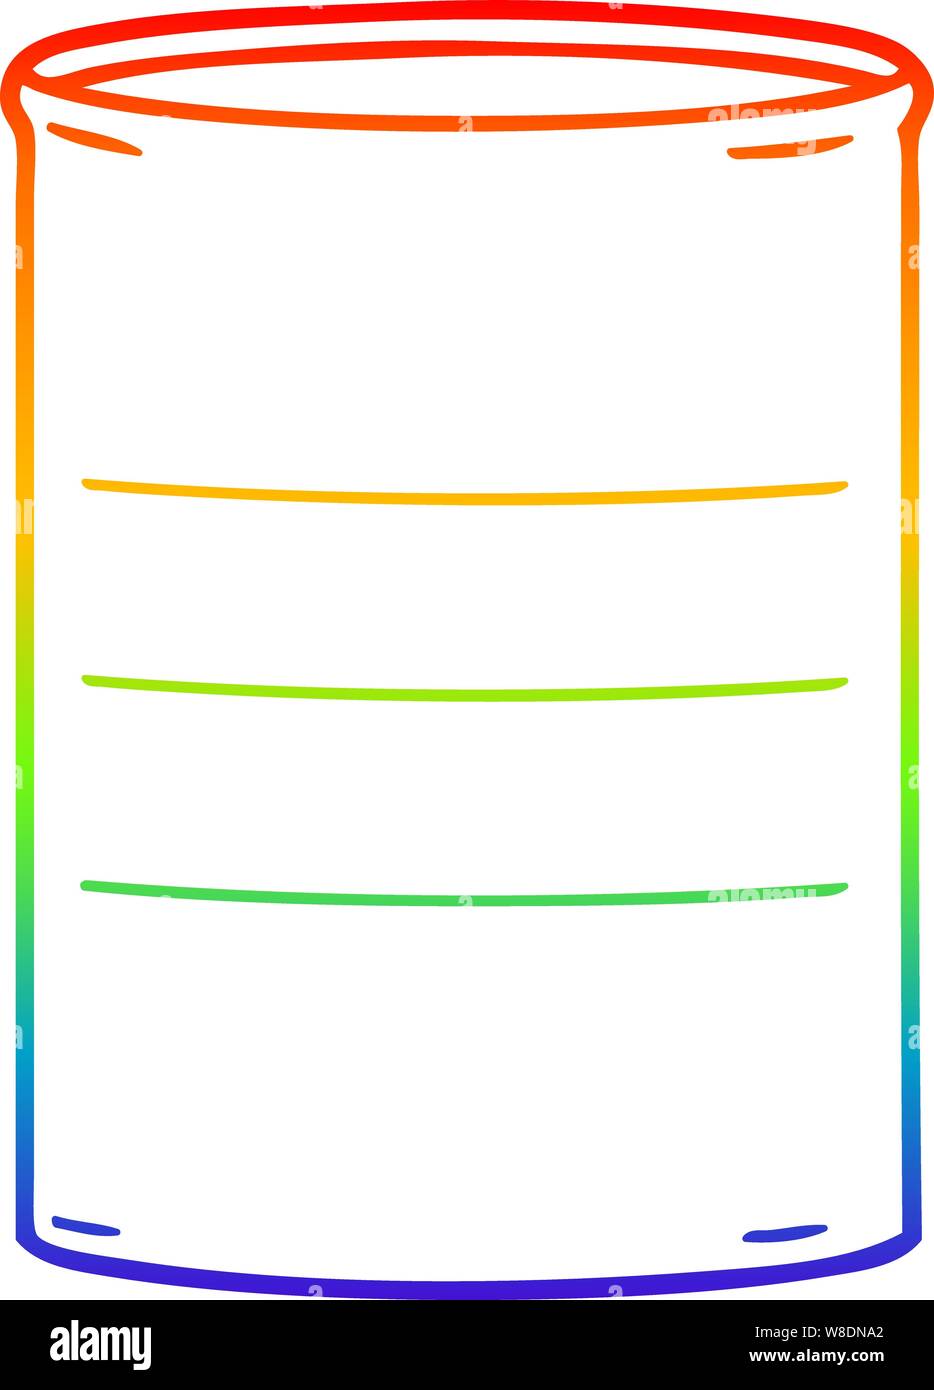 rainbow gradient line drawing of a cartoon oil drum Stock Vector